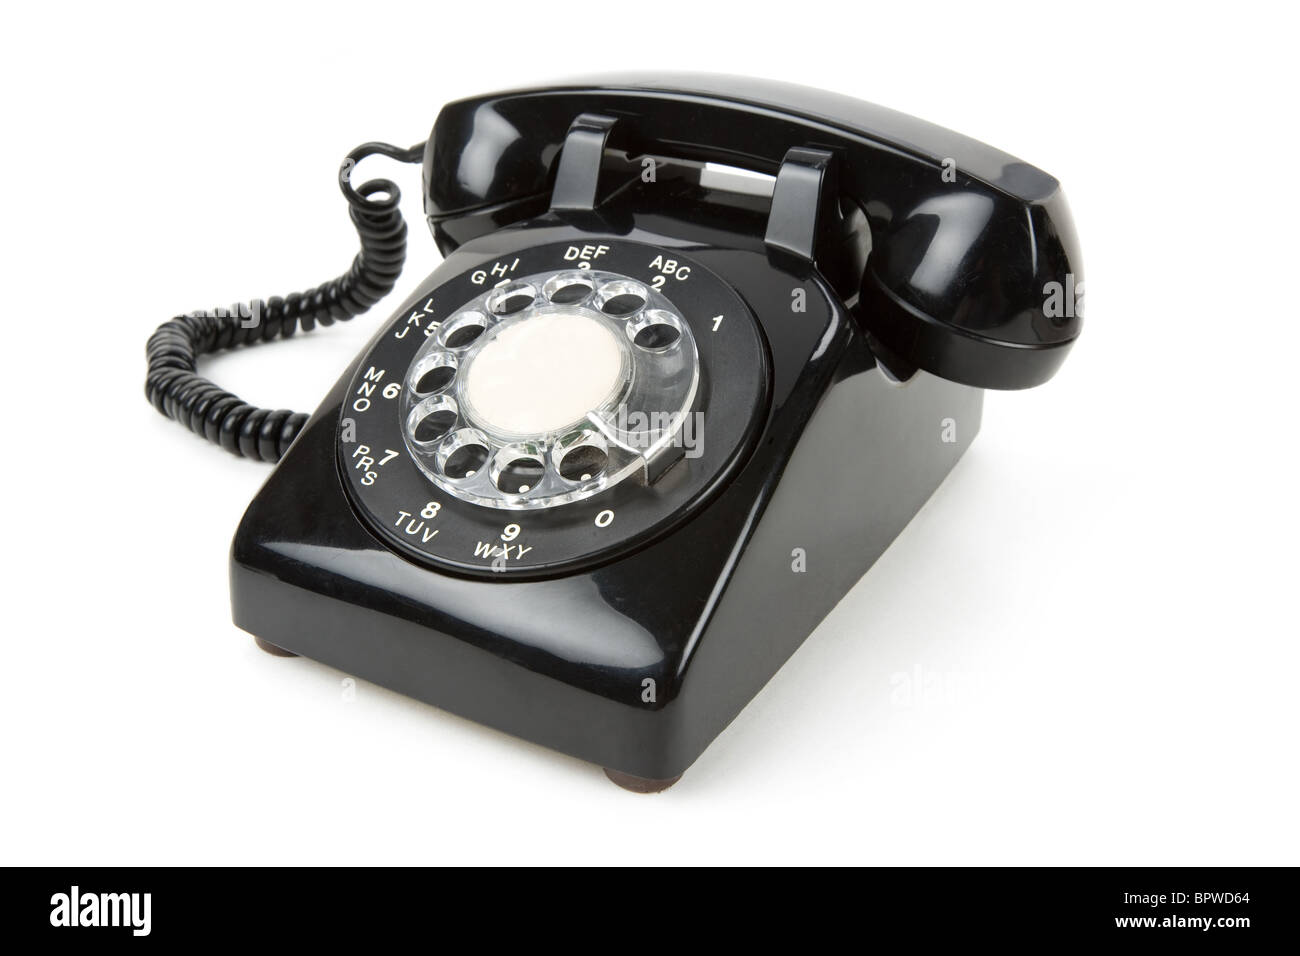 Black telephone with white background Stock Photo